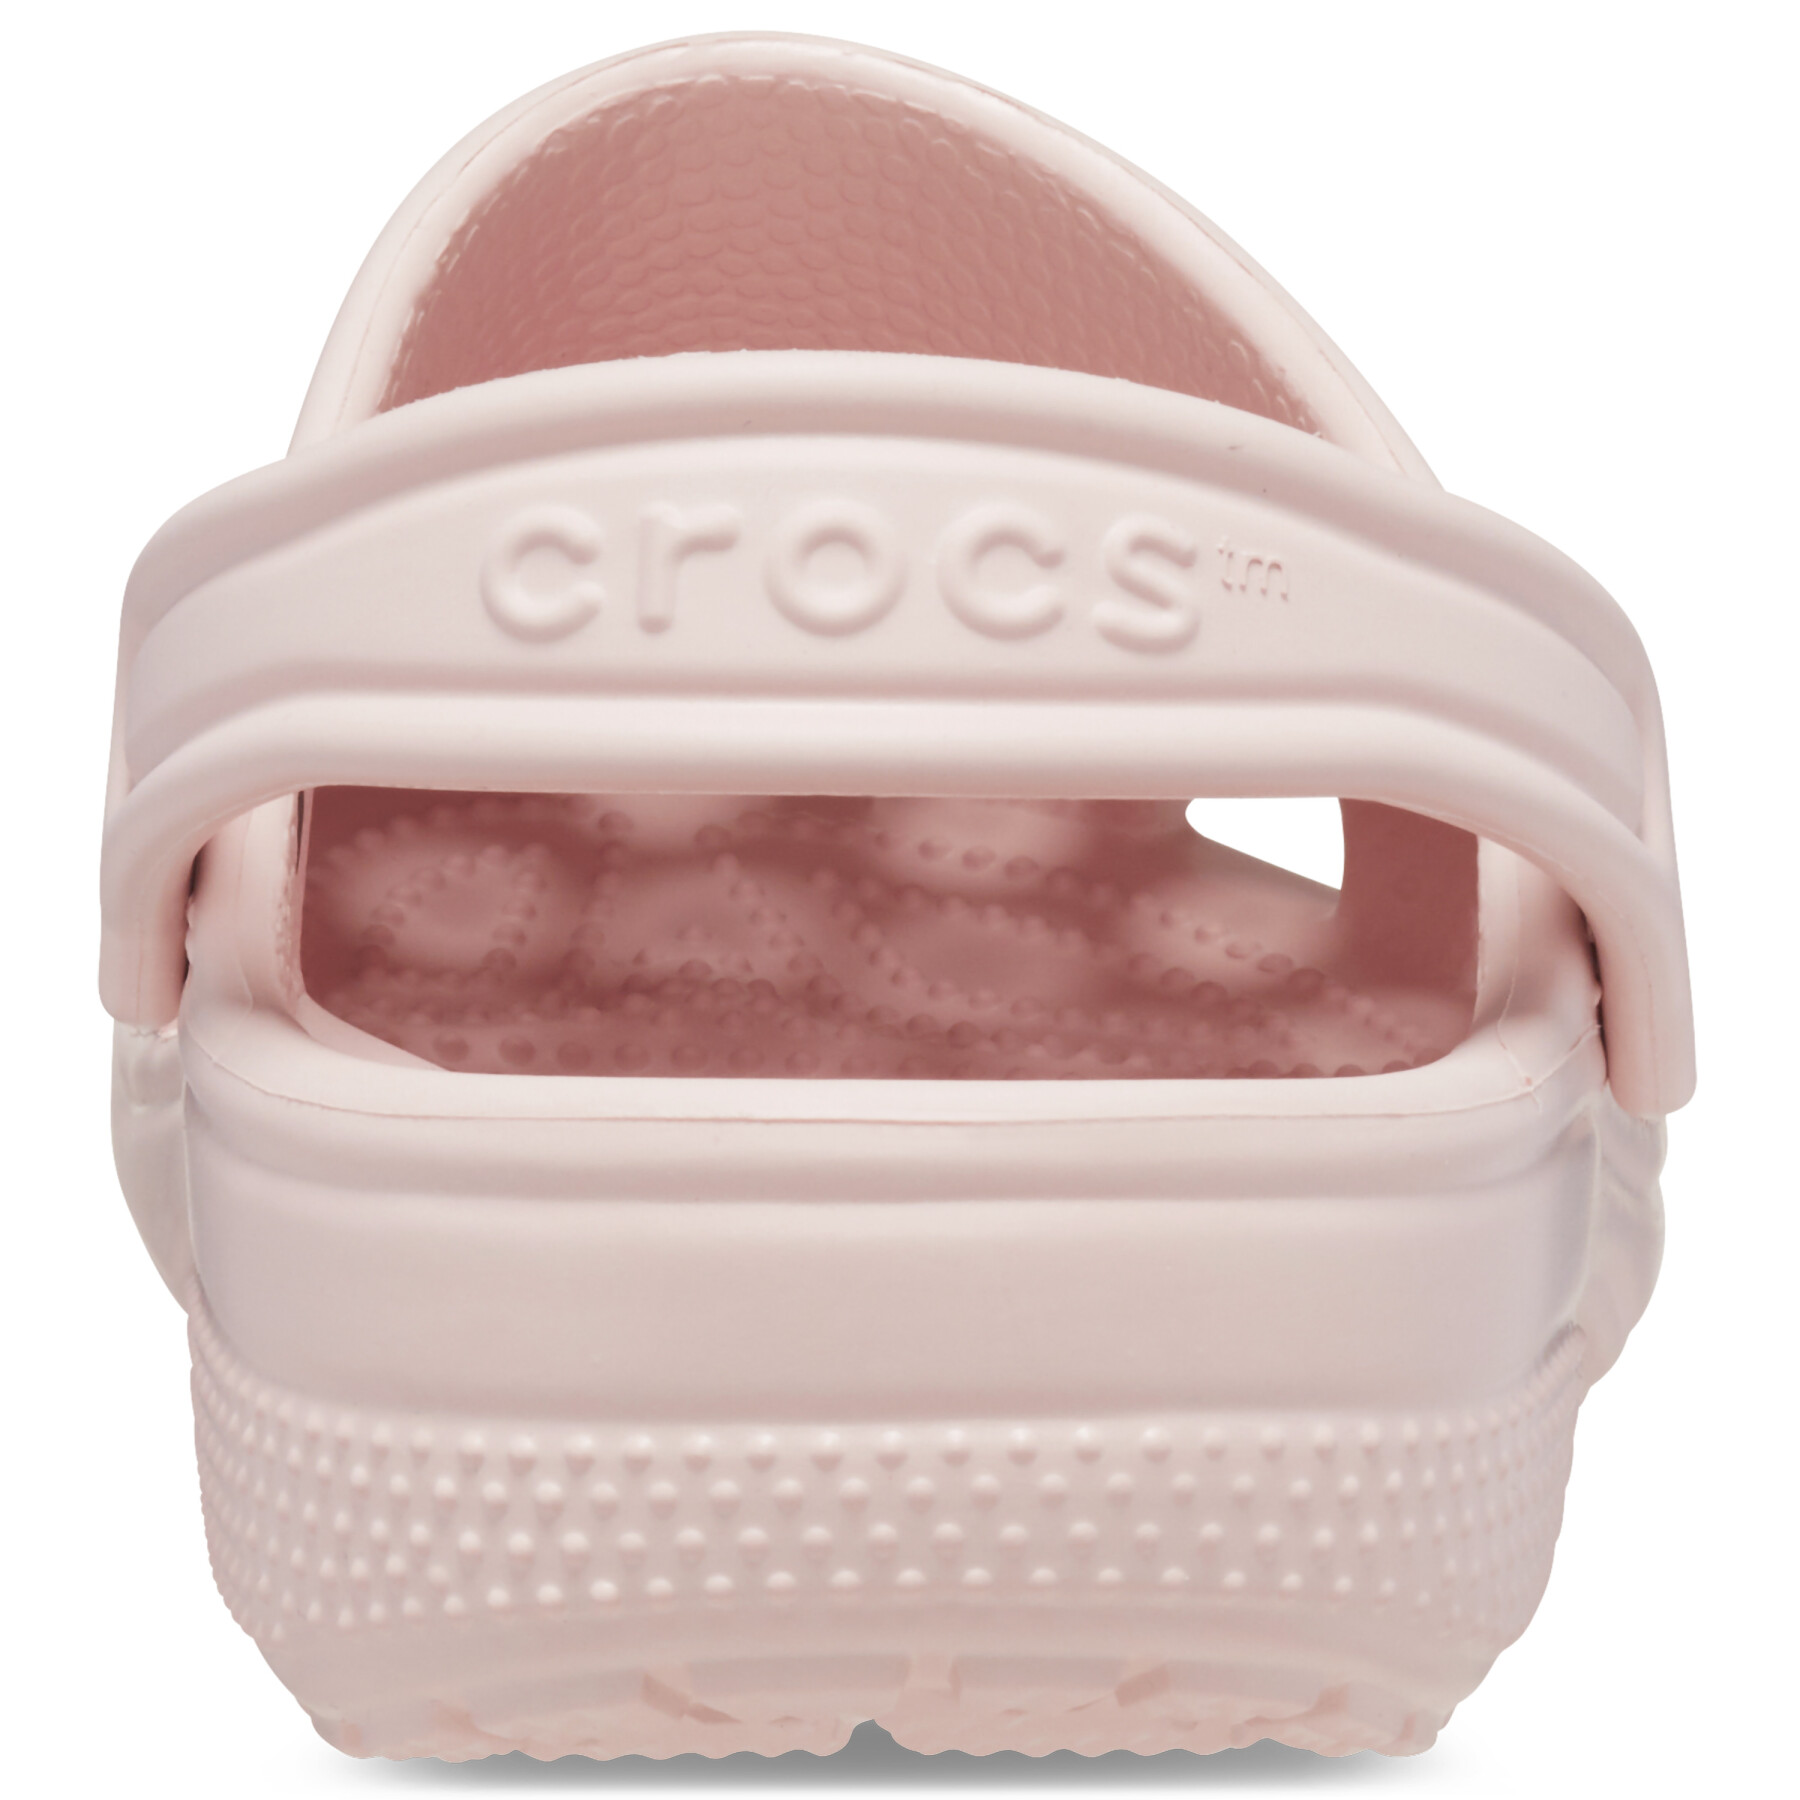 Baby clogs Crocs Classic T